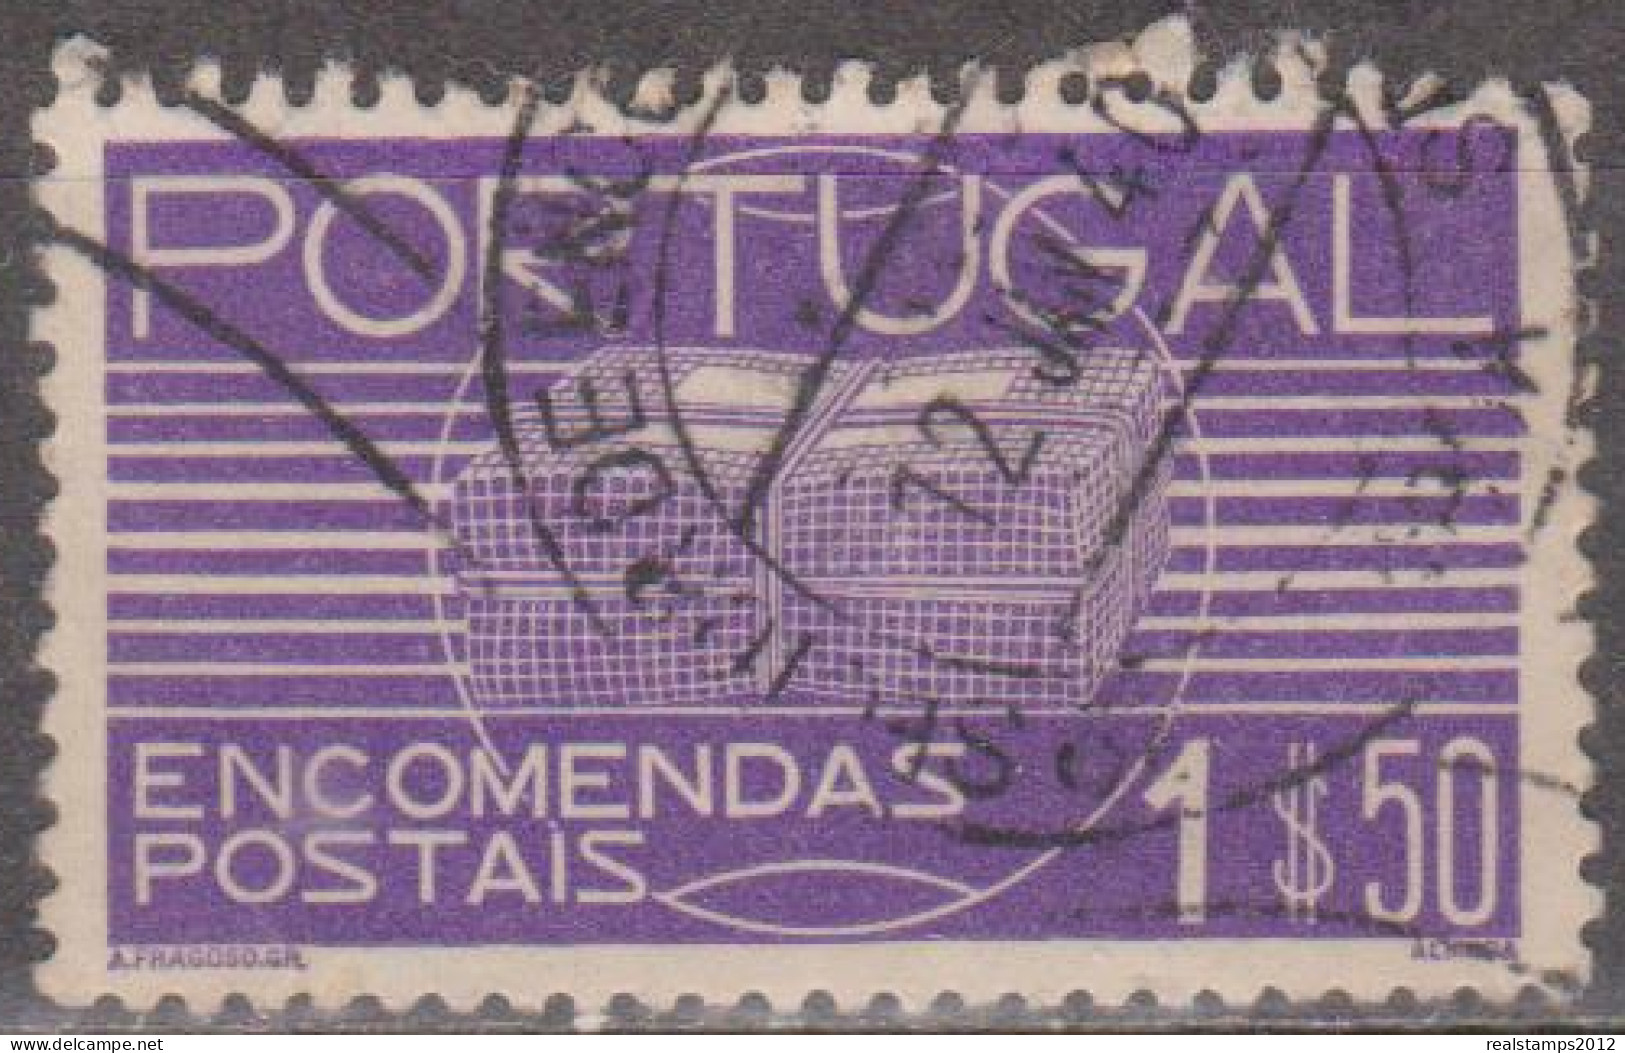 PORTUGAL (ENCOMENDAS POSTAIS) - 1936,    Encomenda Postal.  1$50   (o)  MUNDIFIL   Nº 20 - Oblitérés